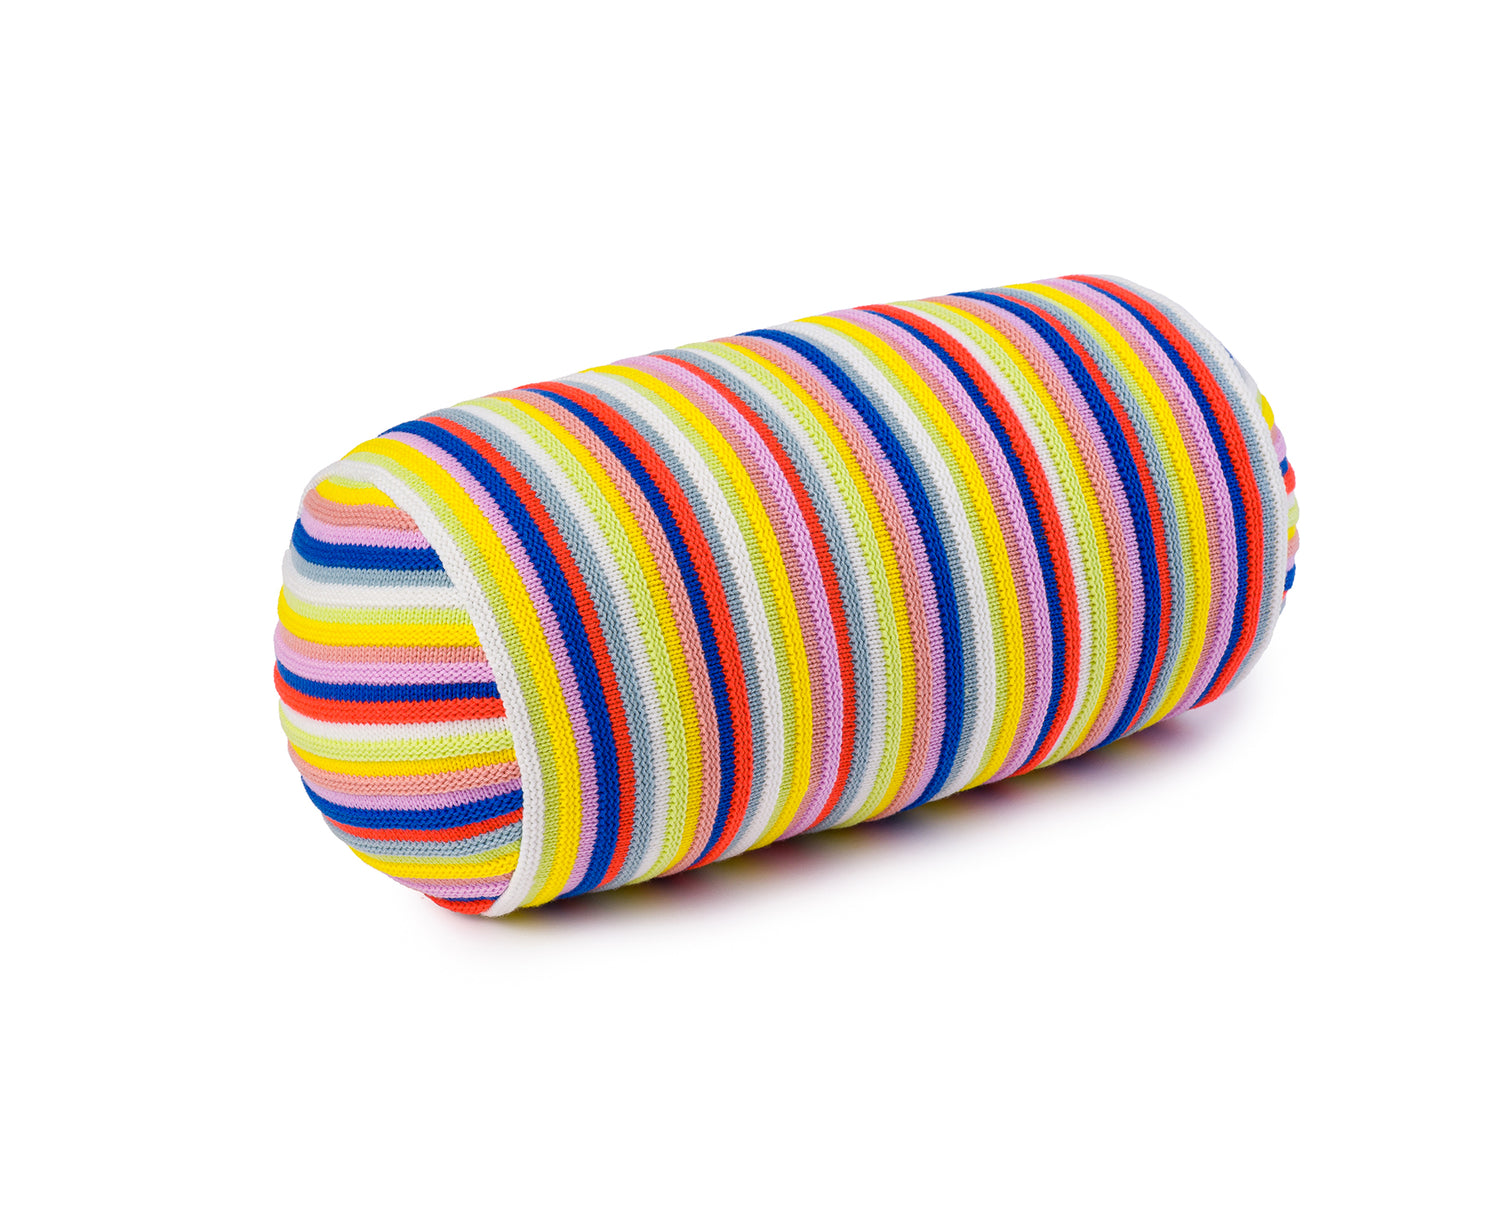 Bolster Pillow in Rainbow Circus Stripe by Verloop